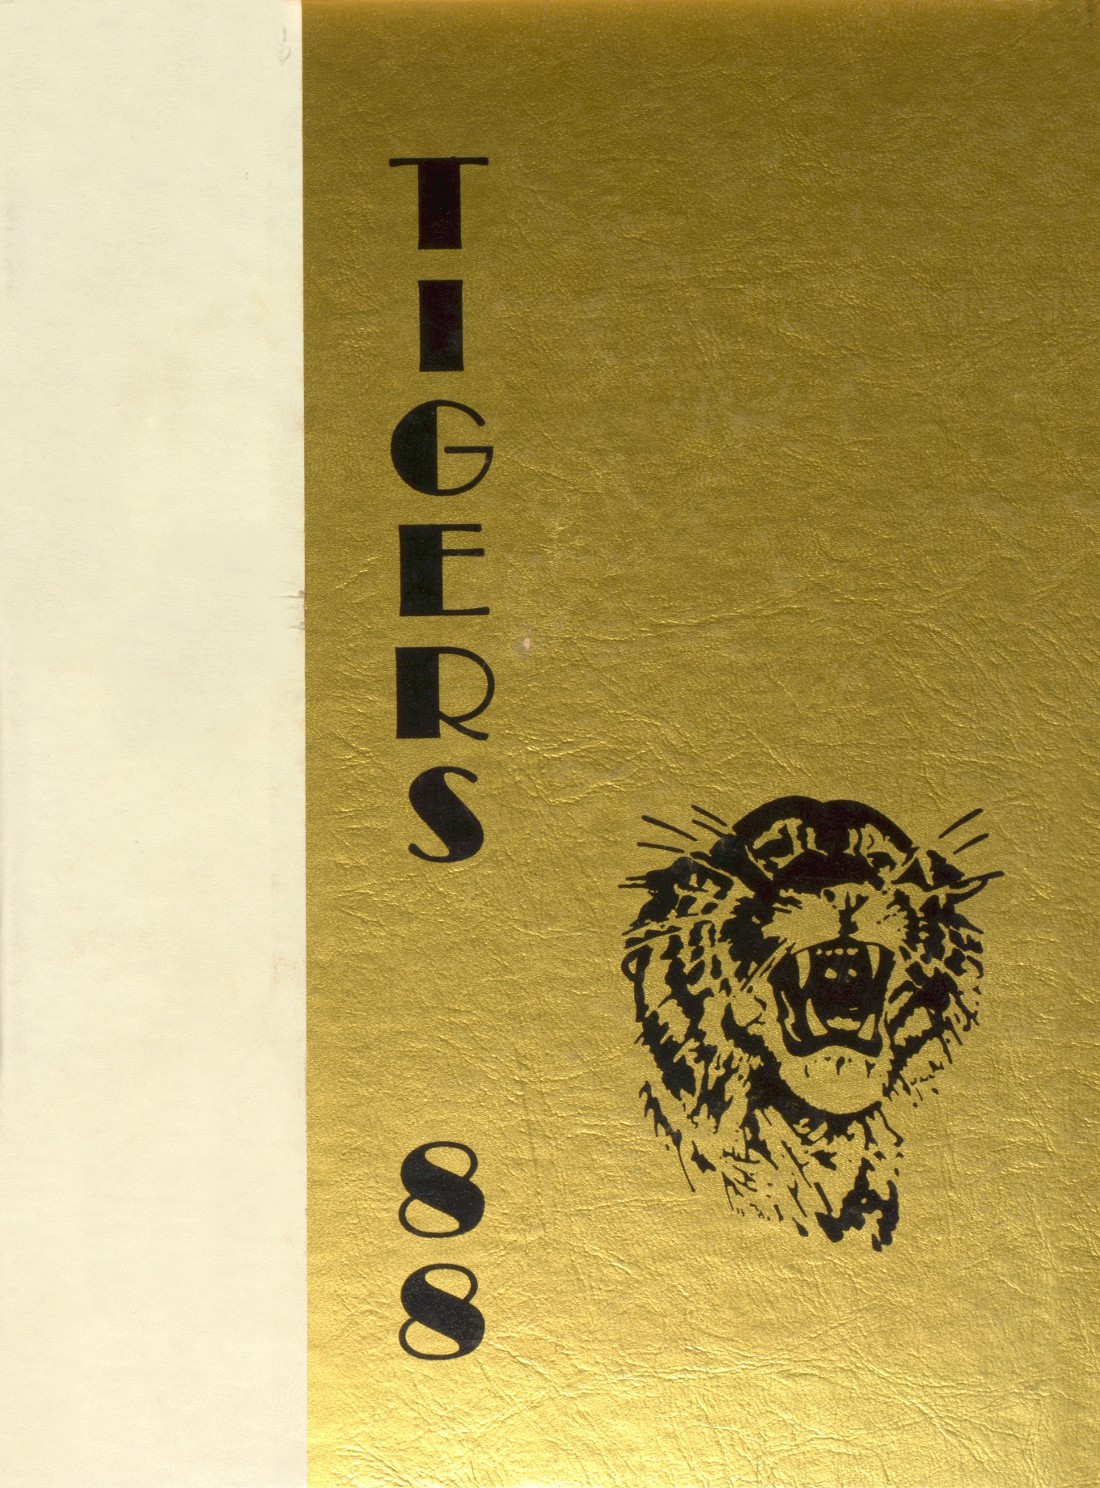 1988-yearbook-from-alamogordo-high-school-from-alamogordo-new-mexico